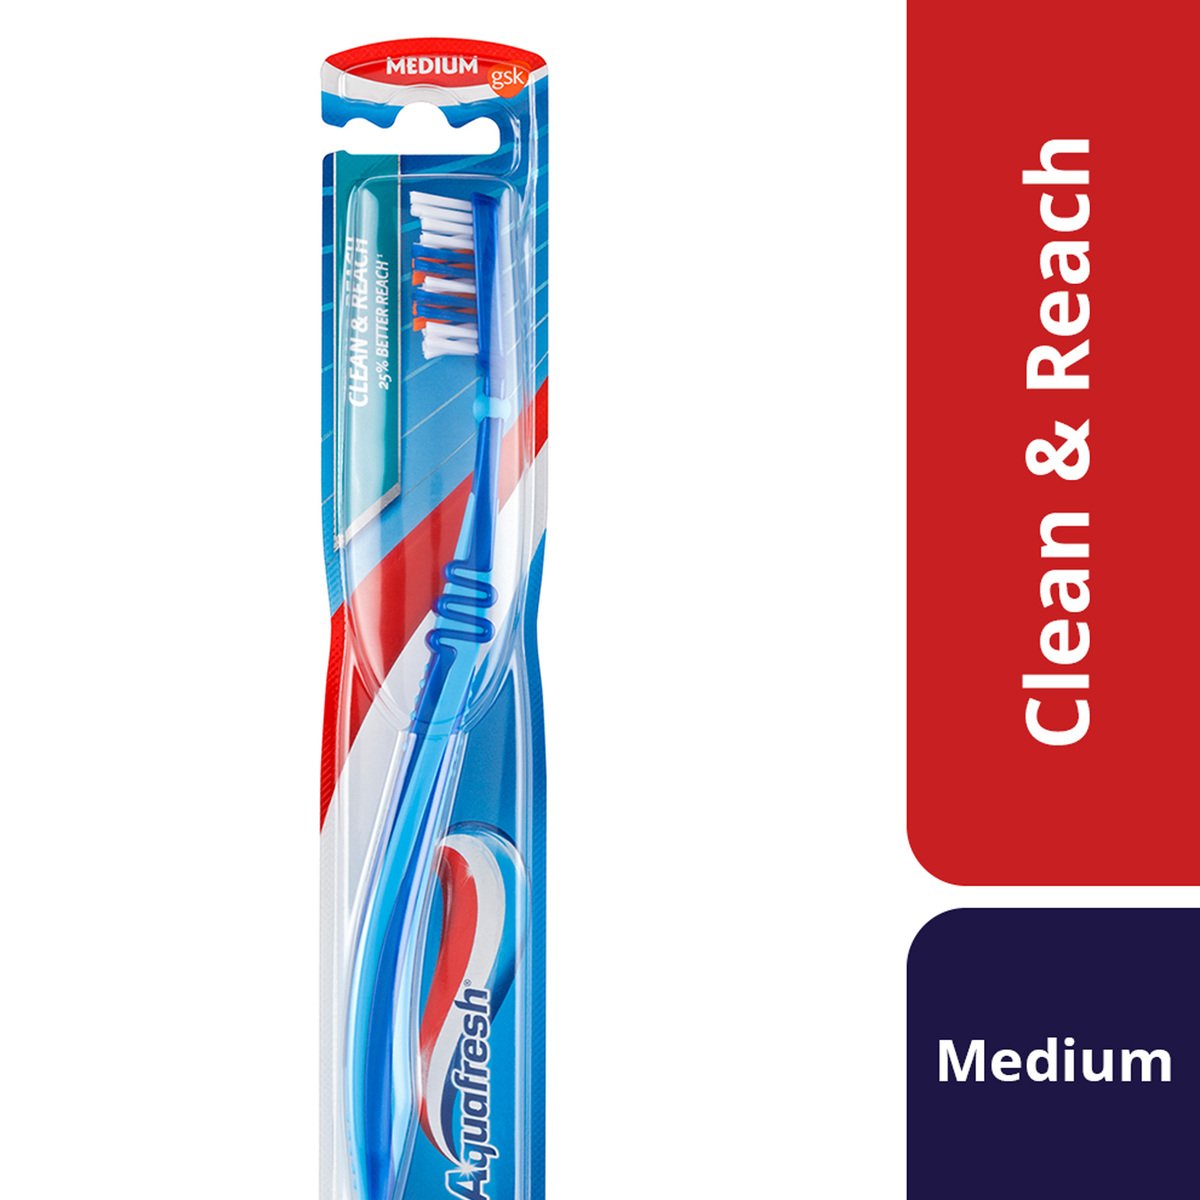 Aquafresh Clean & Reach Toothbrush Medium Assorted Color 1 pc